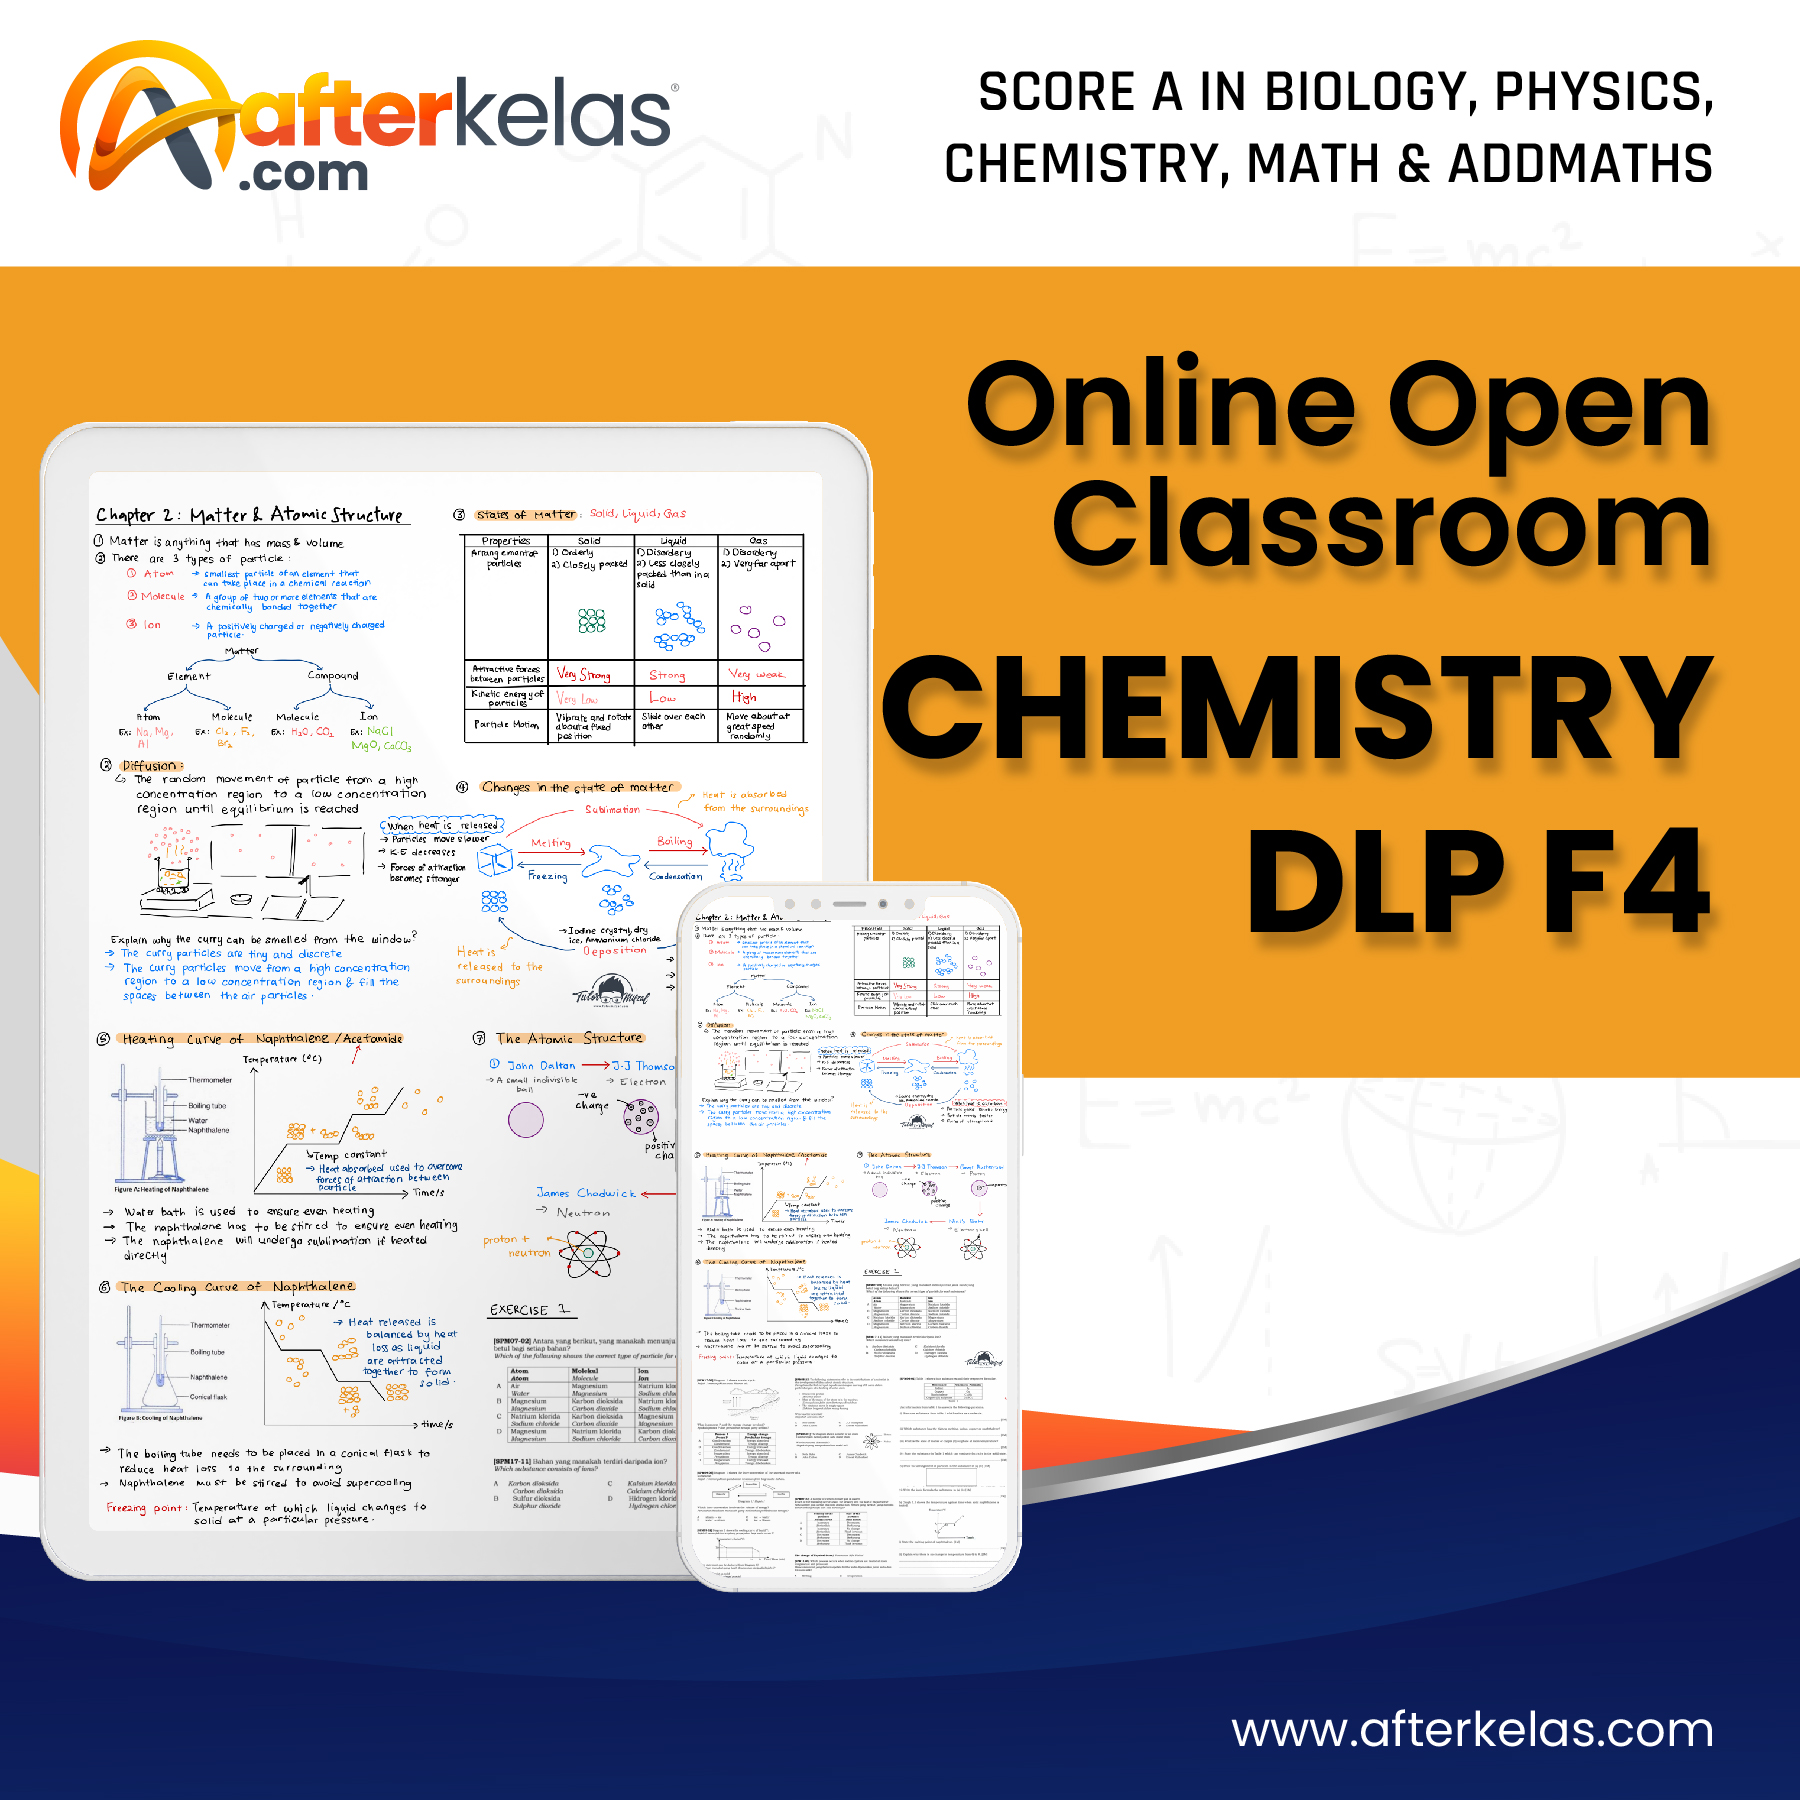 F4 chemistry dlp